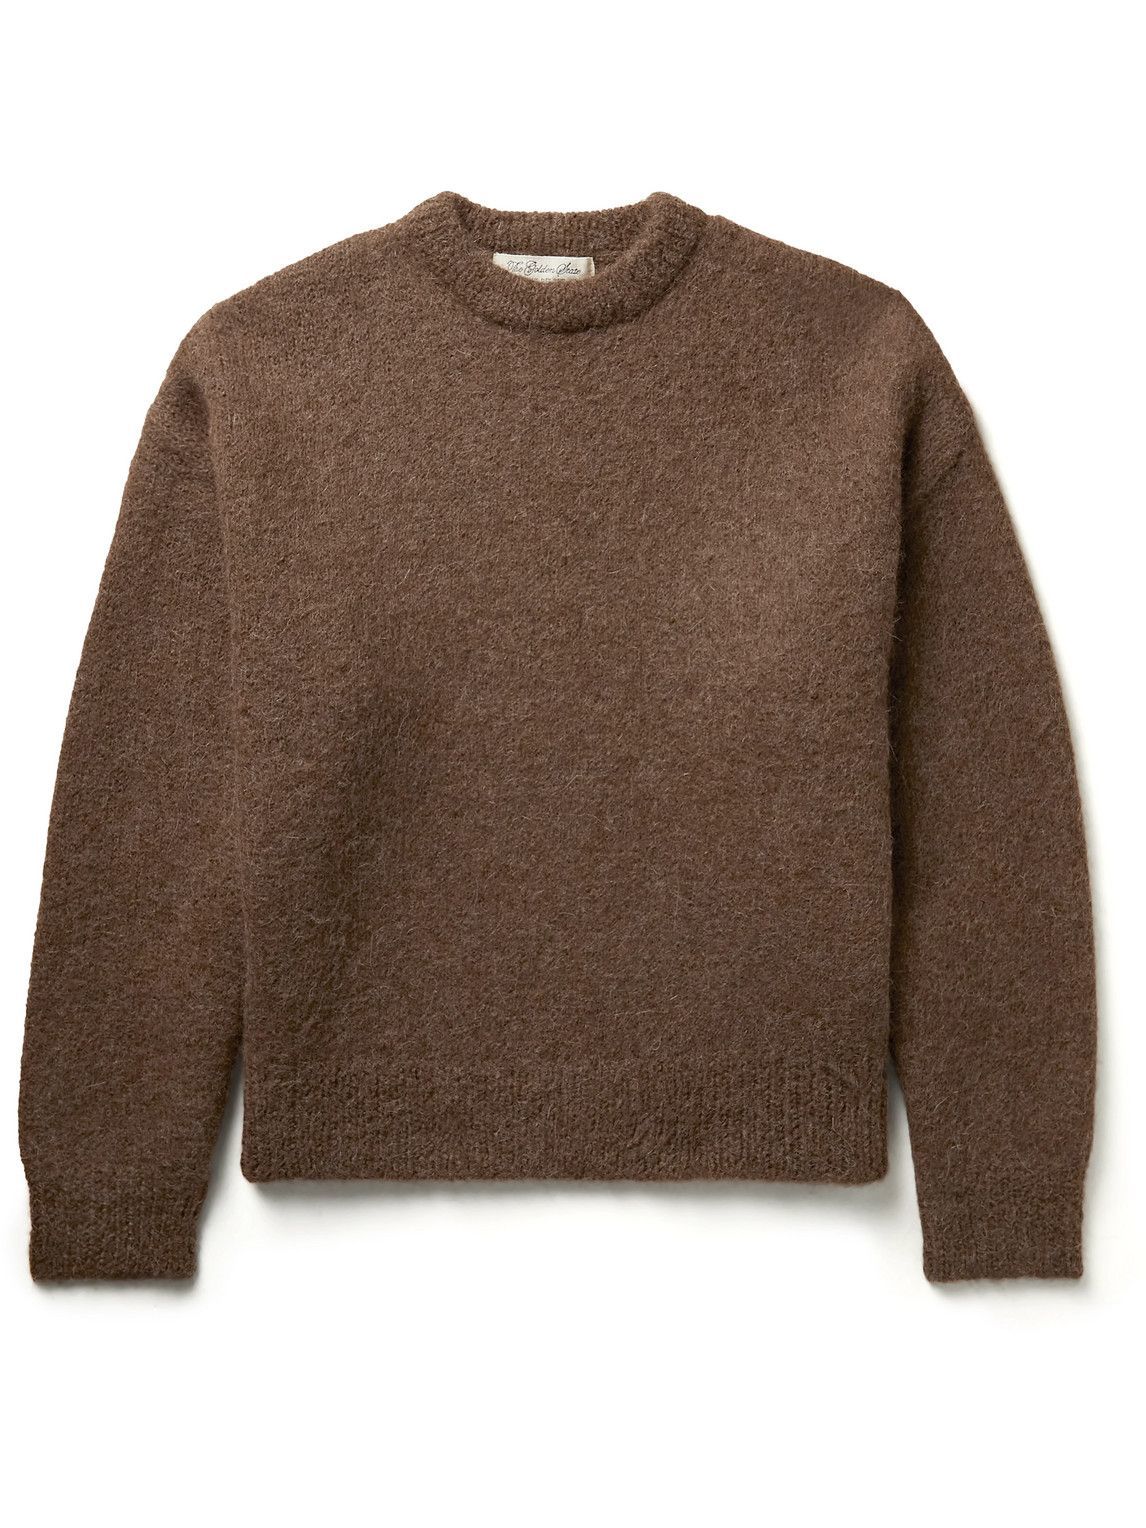 Remi Relief - Alpaca Sweater - Brown Remi Relief